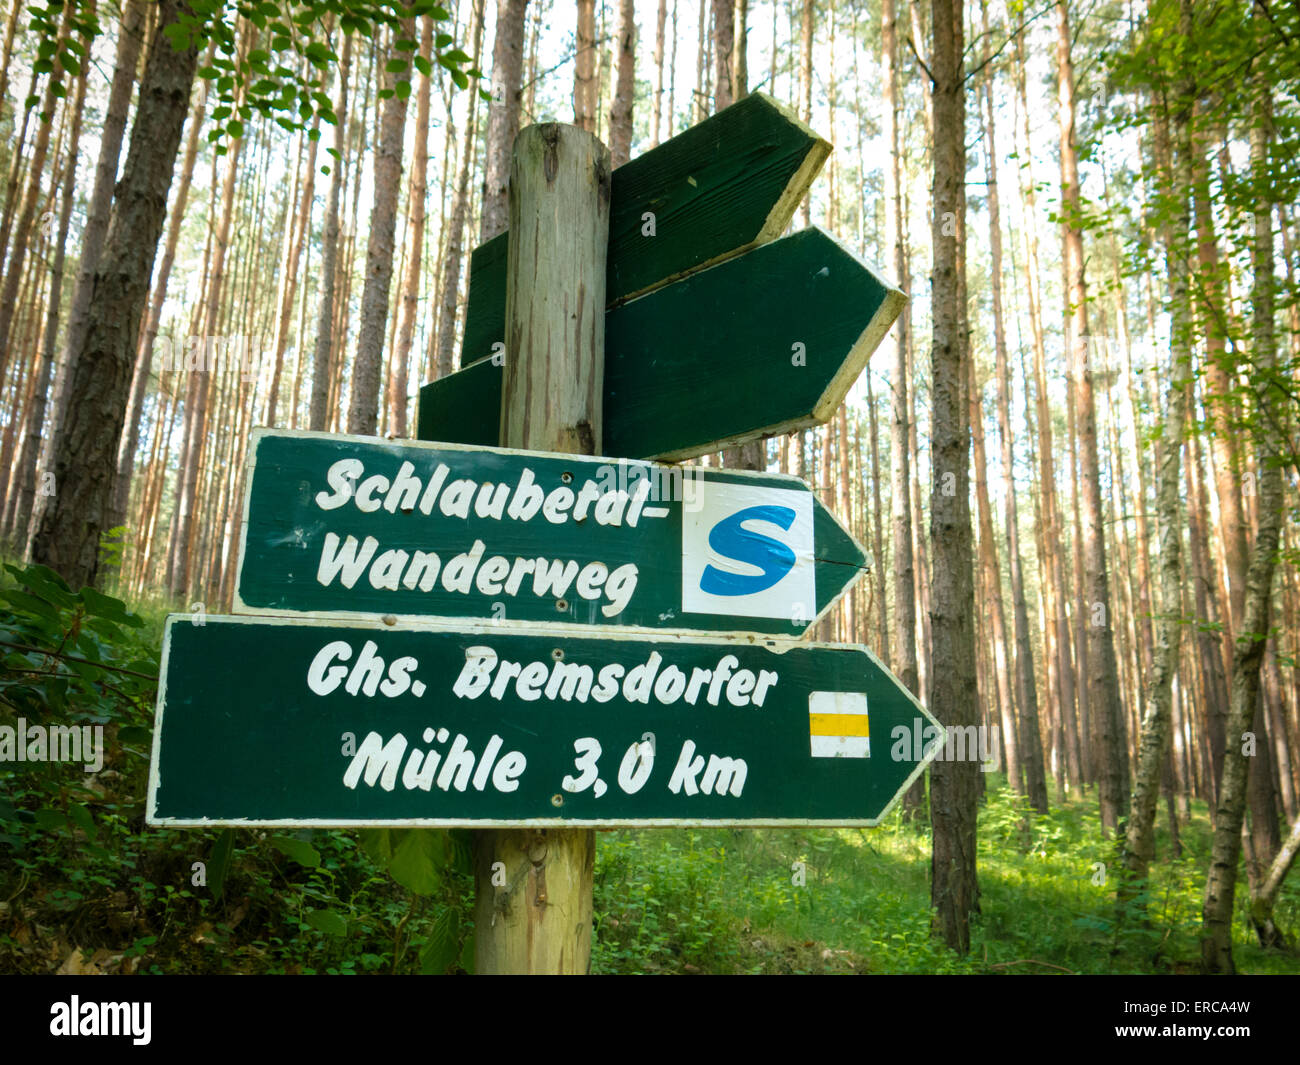 Schlaubetal Wanderweg Stock Photo